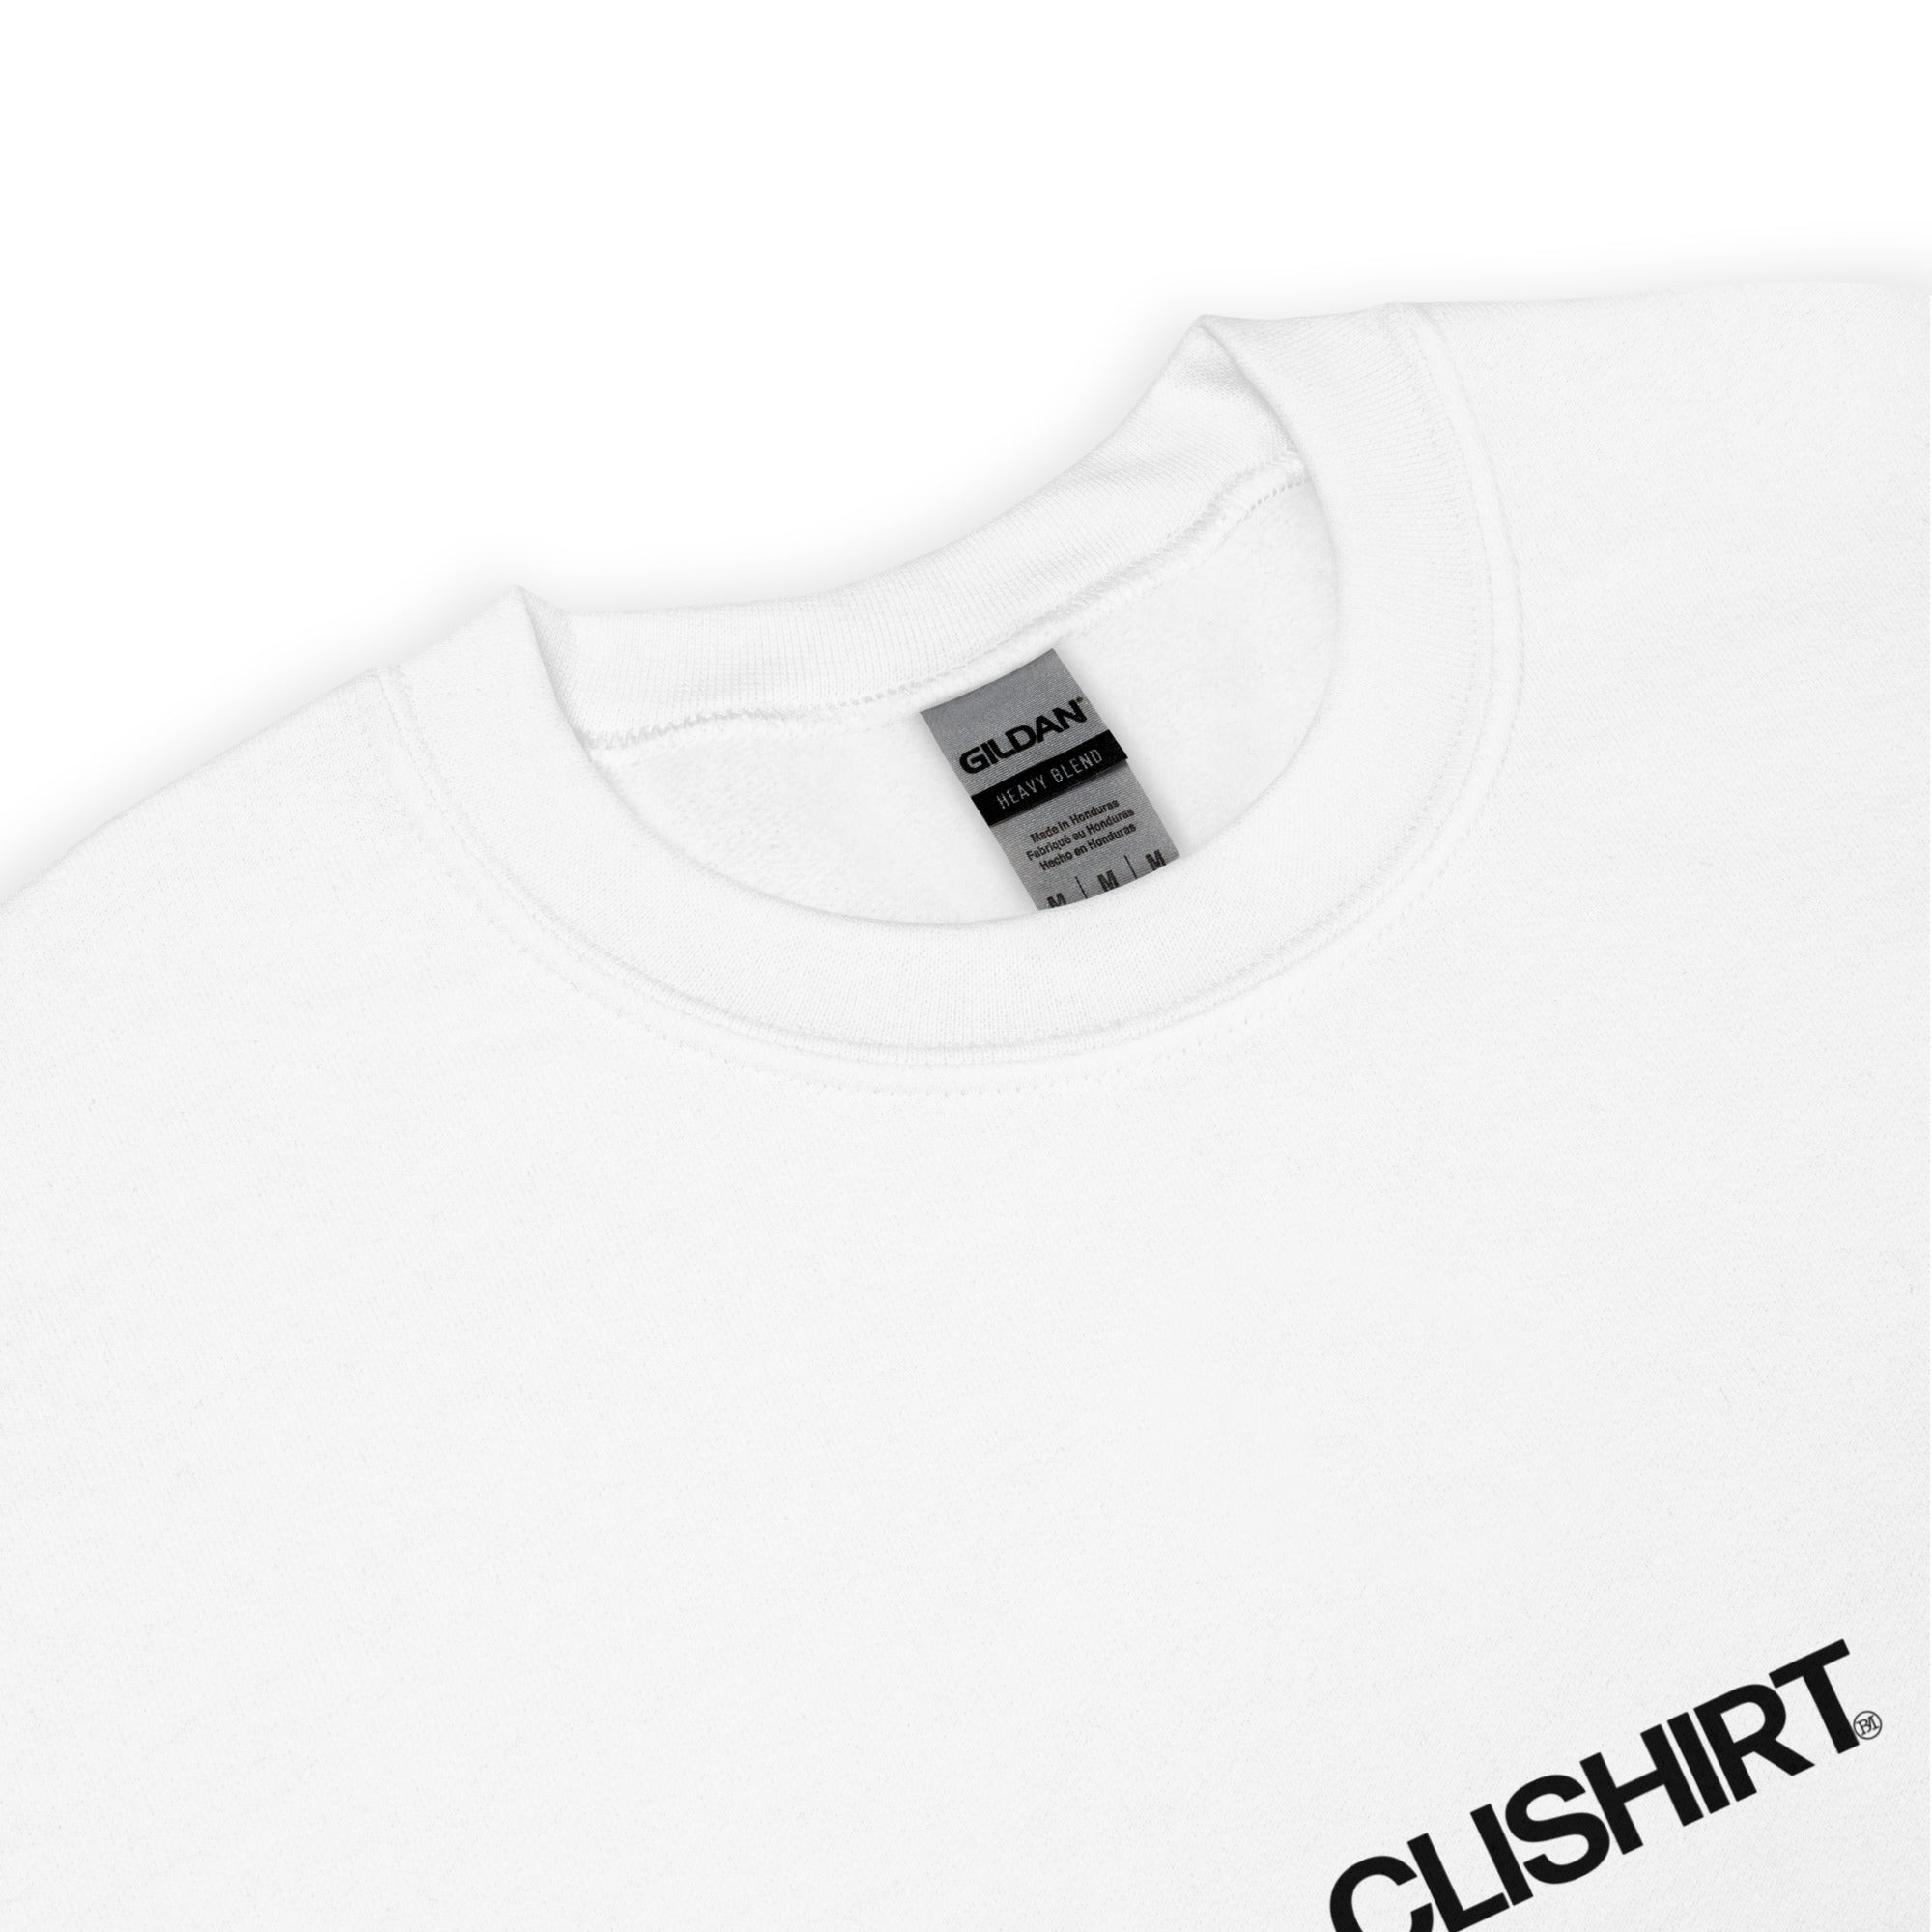 Clishirt© Sweatshirt